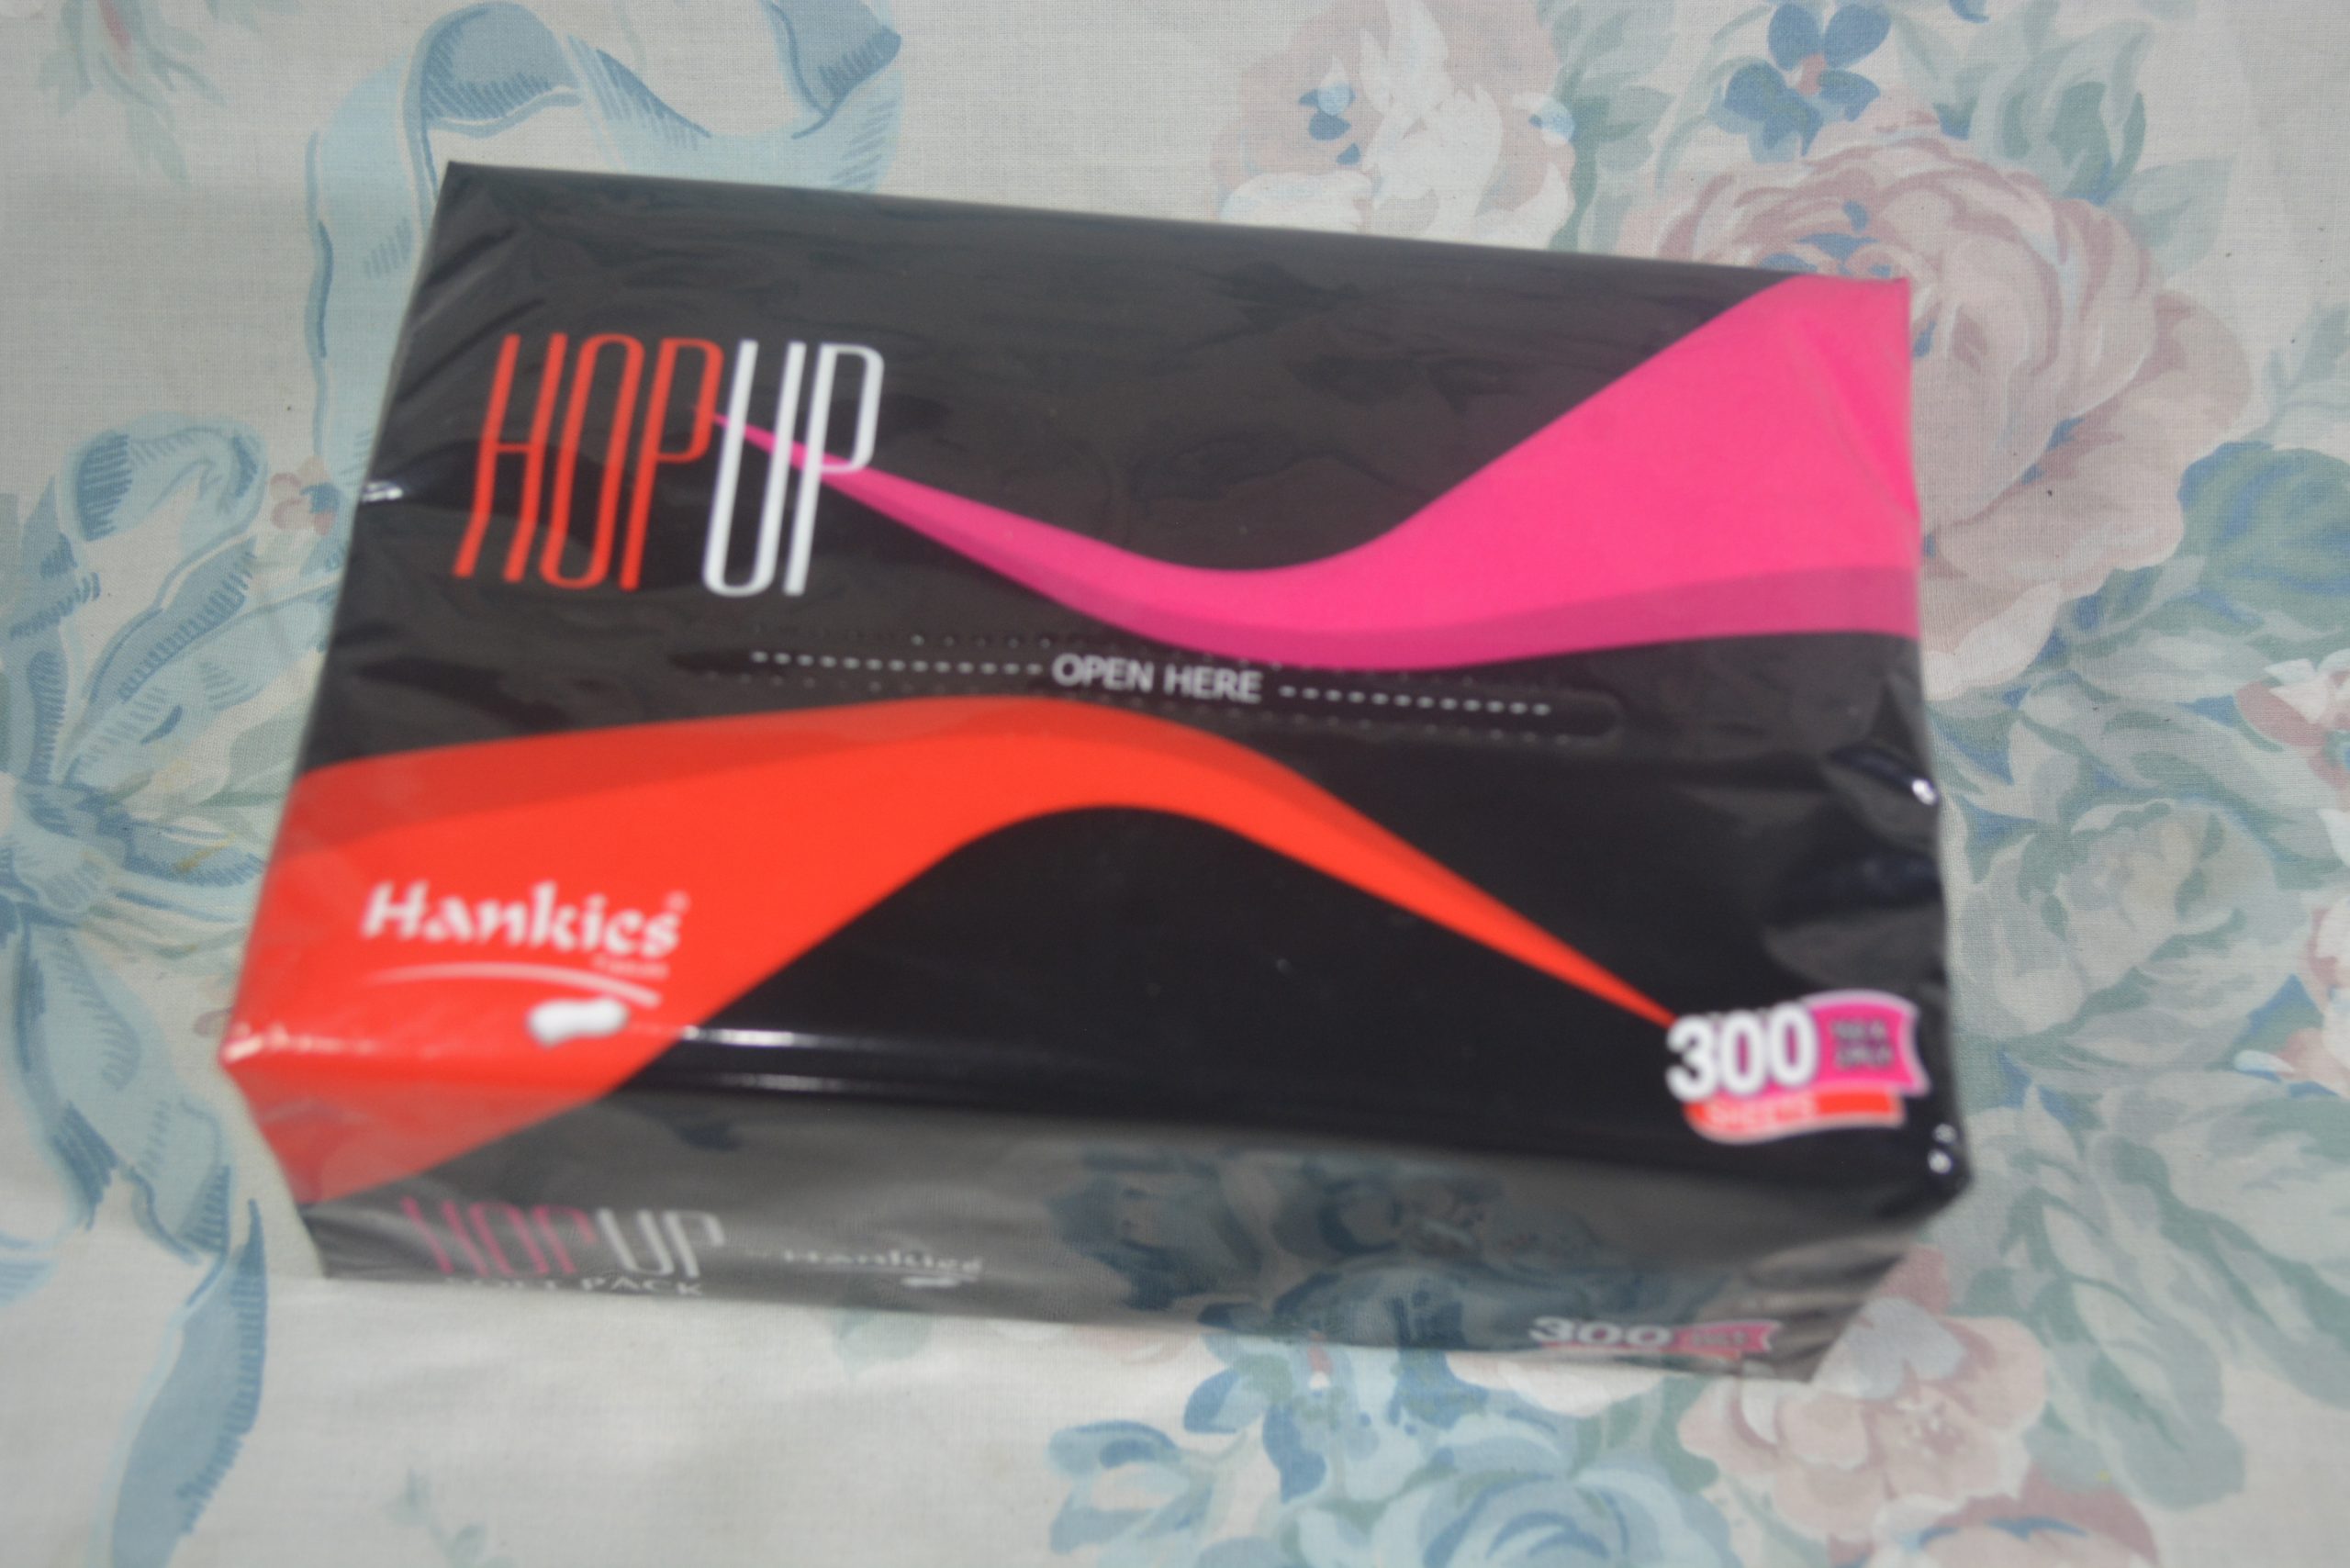 5. Hop up Soft tissue box (1)